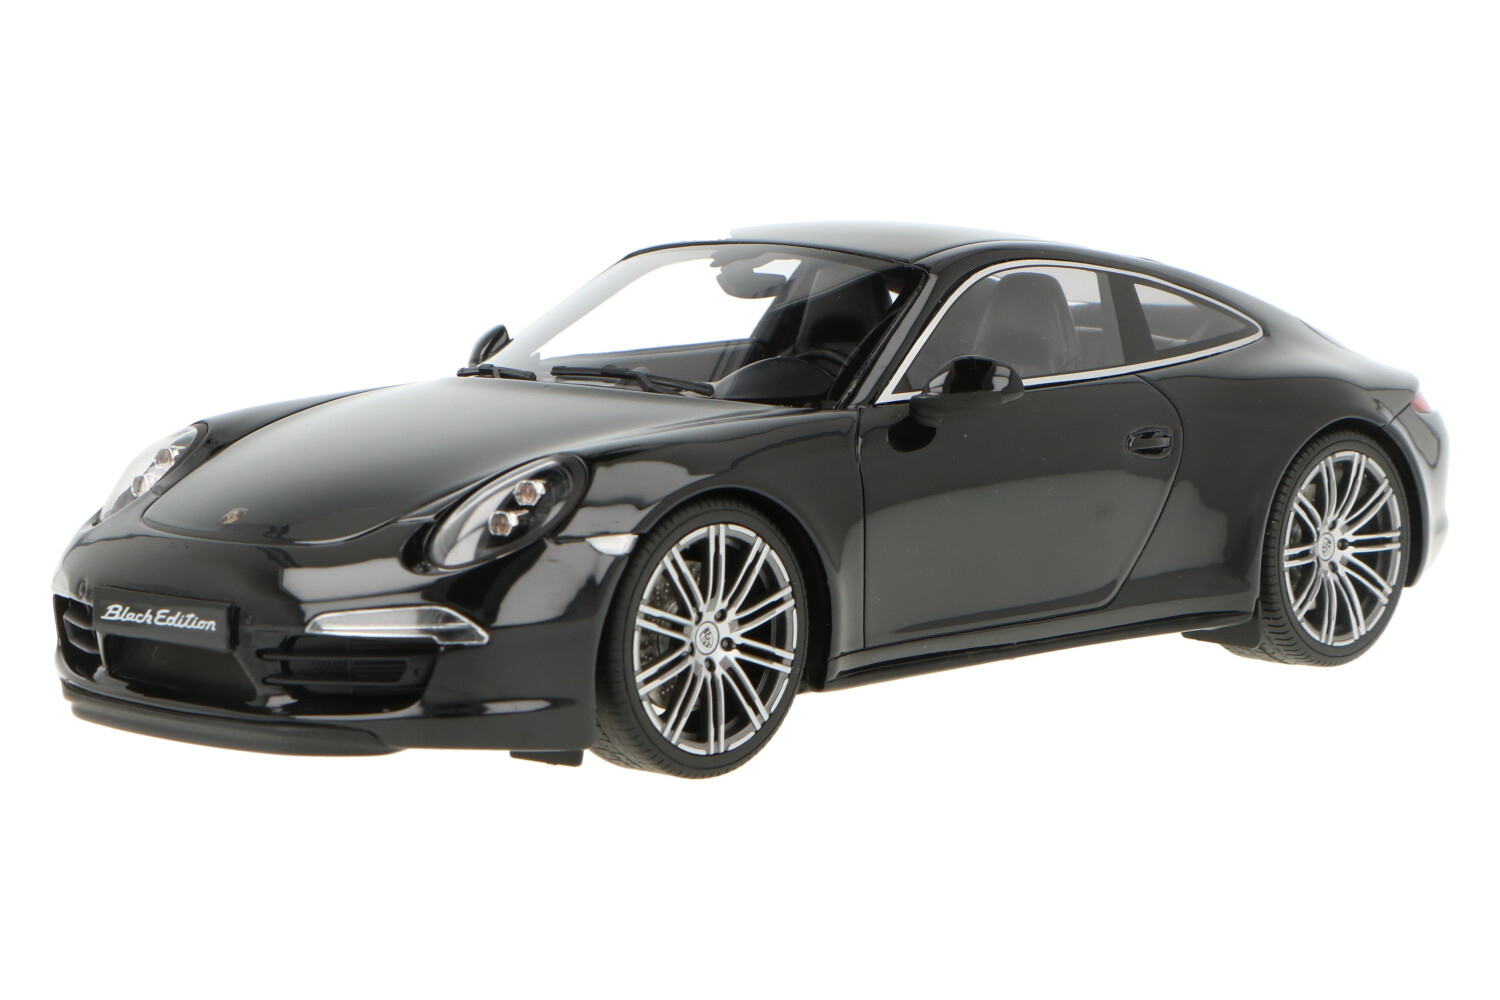 Porsche-911-Black-Edition-GT114_13159580010301393Porsche-911-Black-Edition-GT114_Houseofmodelcars_.jpg